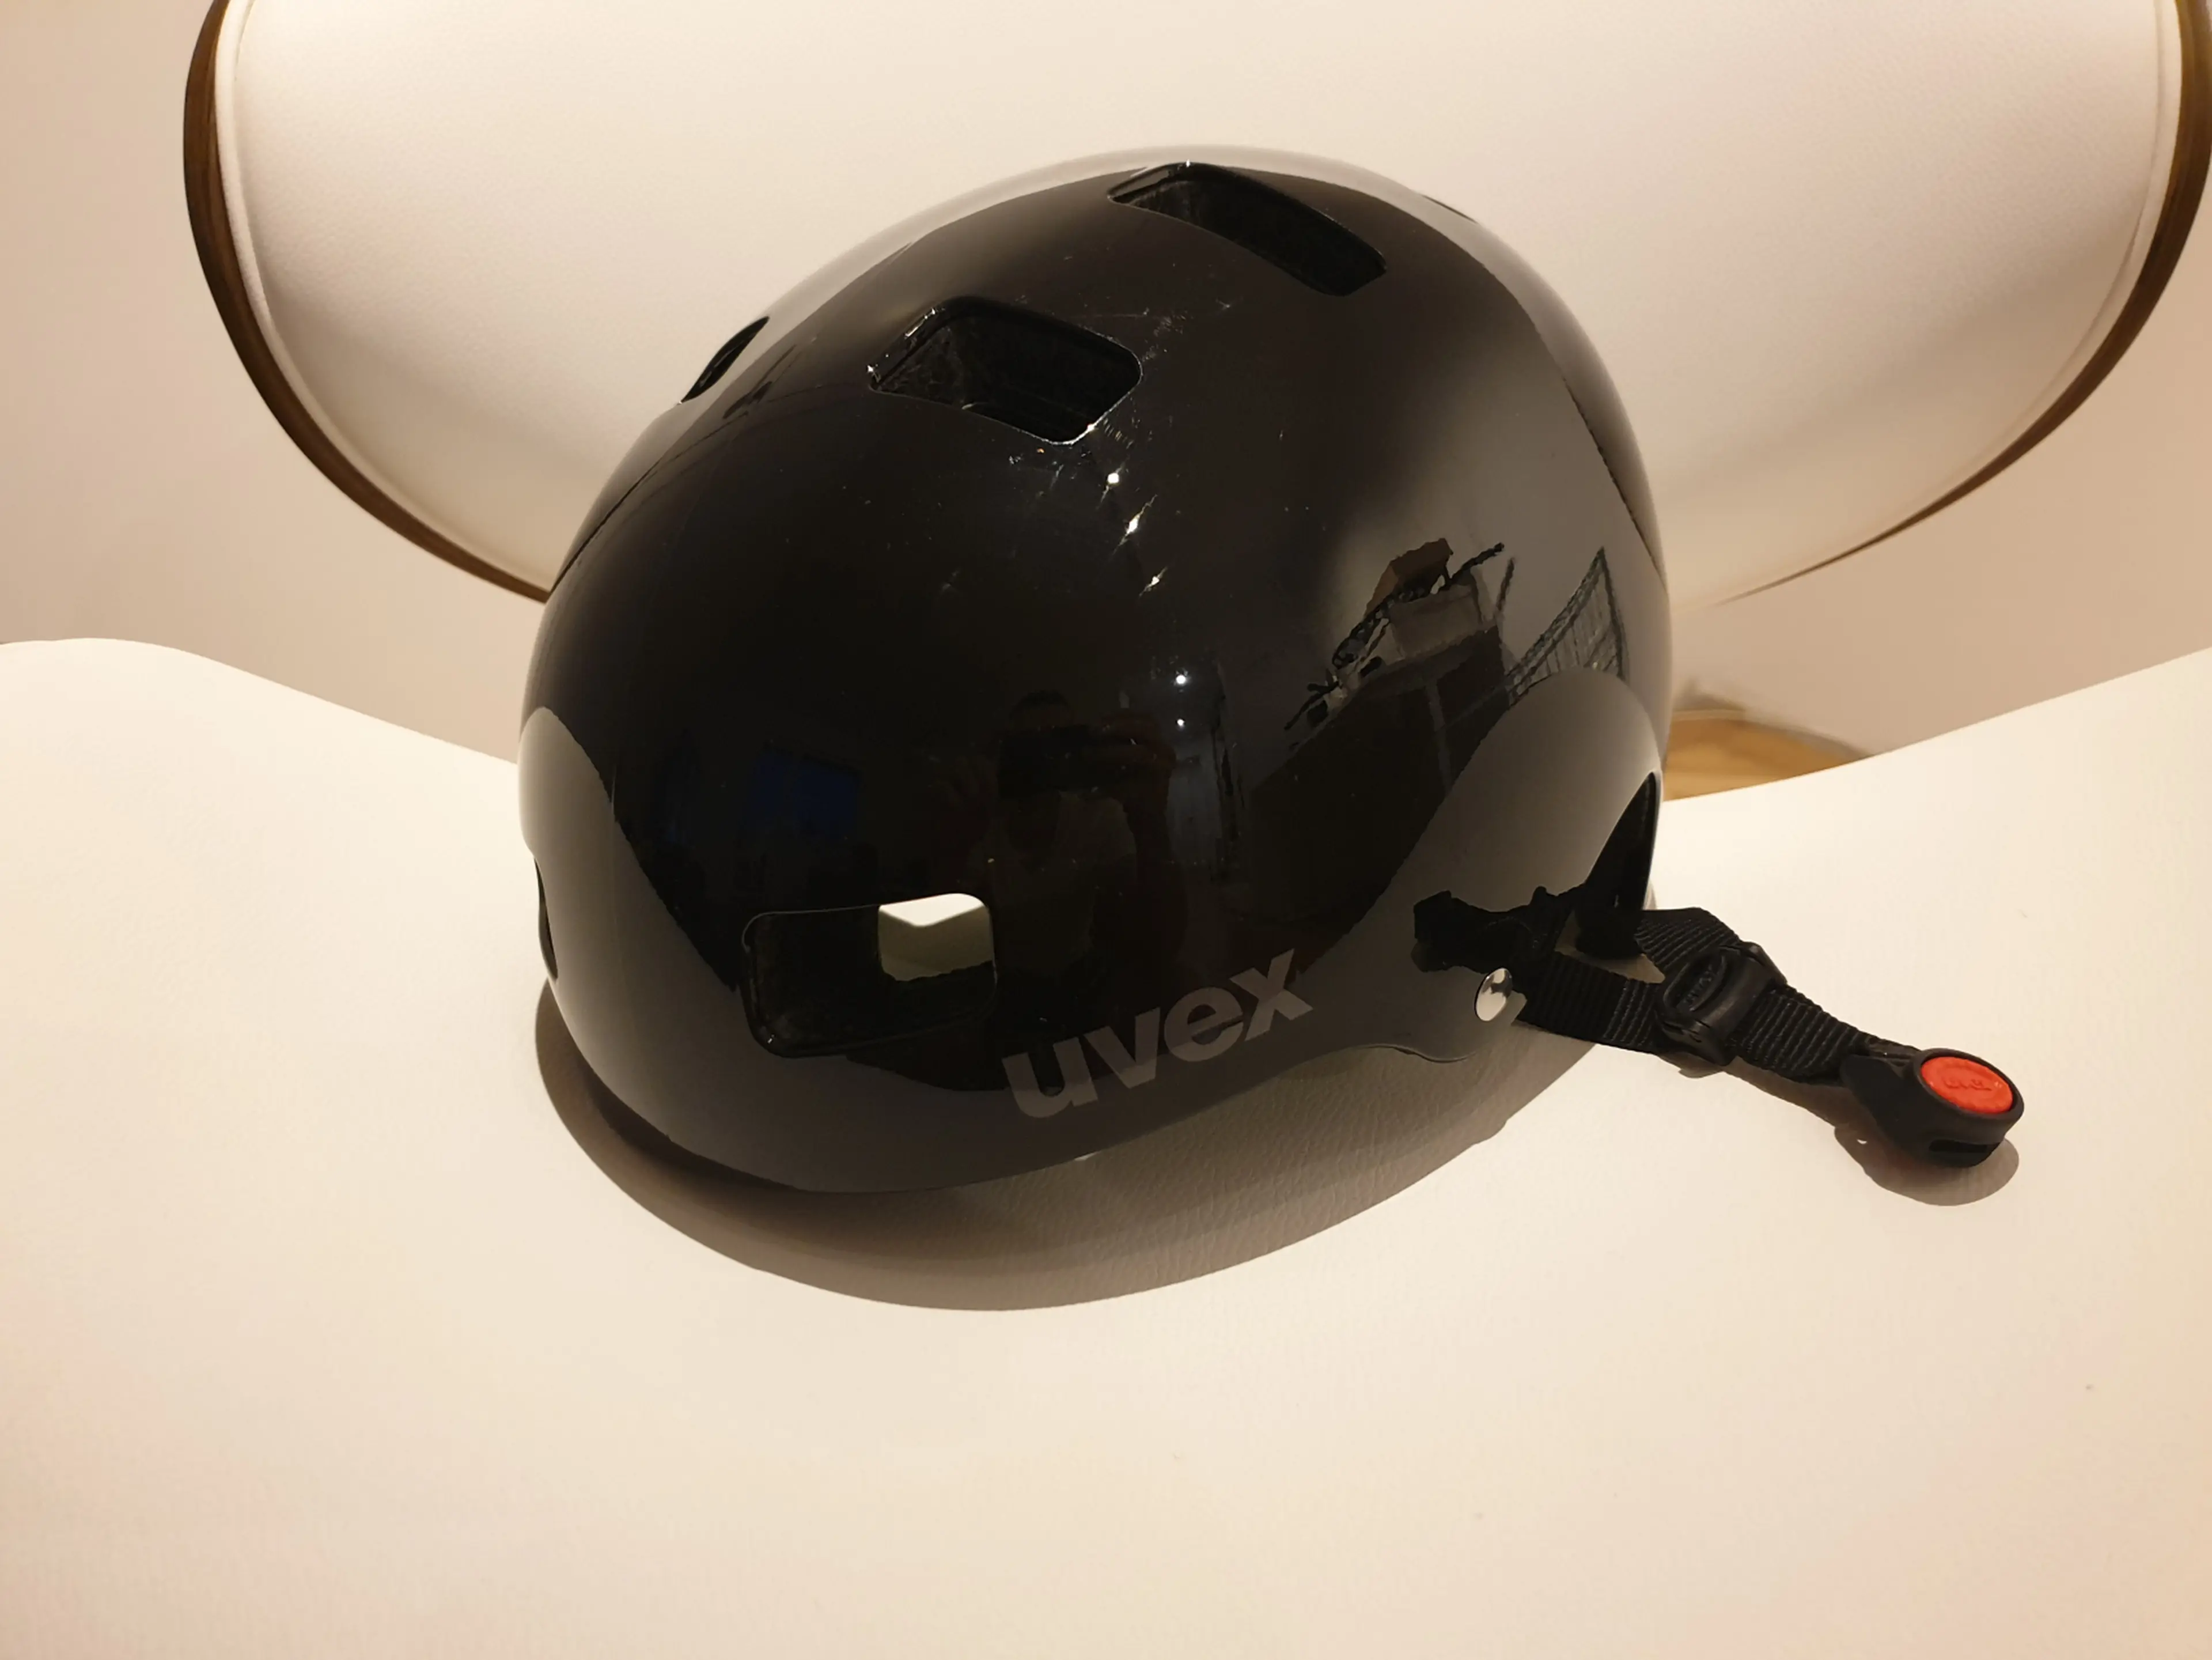 Image Casca Uvex hlmt 5 bike - Helmet - black Size: 55-58cm